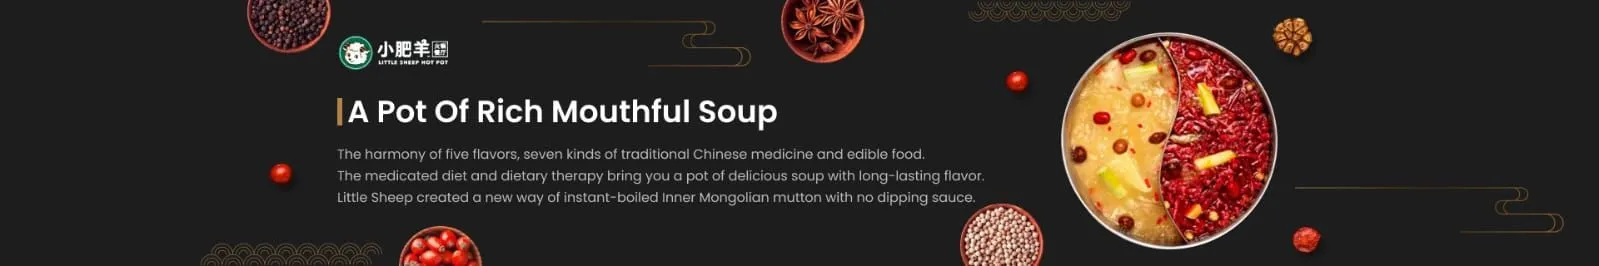 A pot of rich mouthful Soup